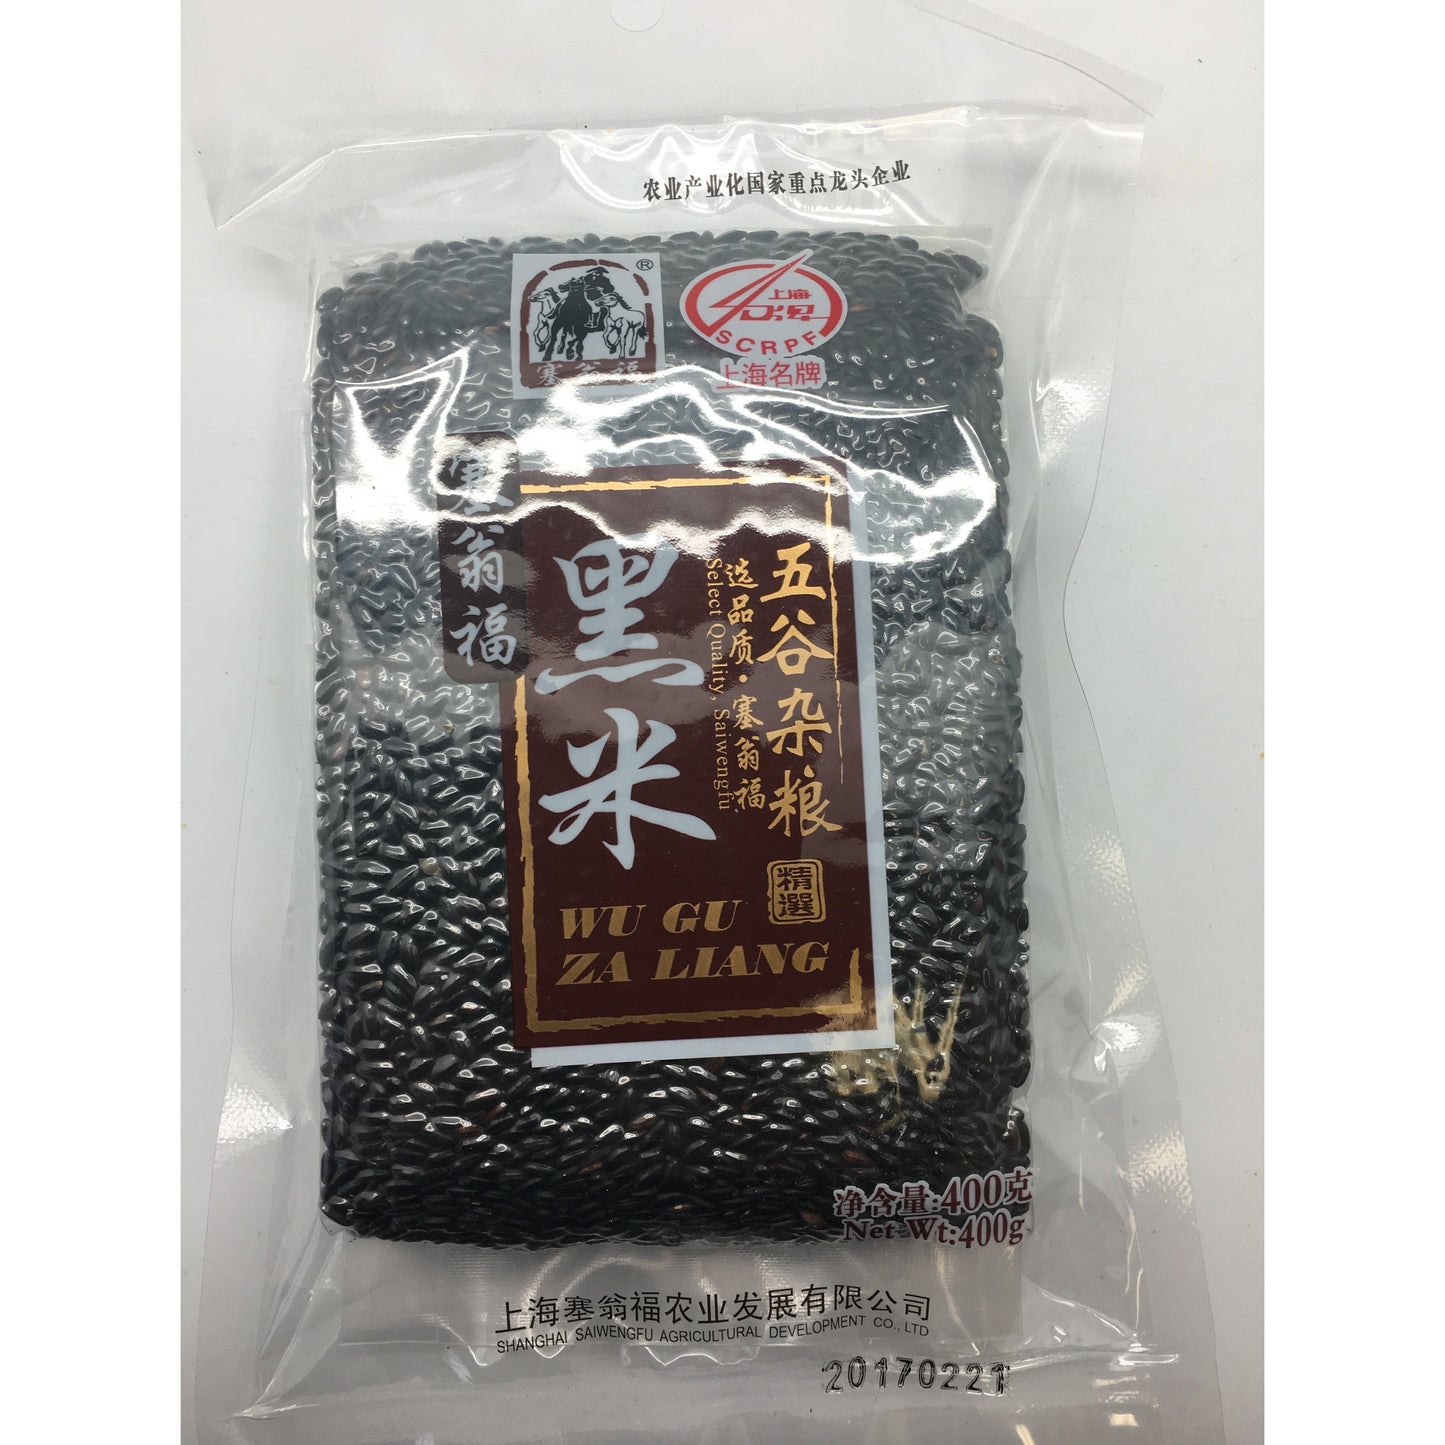 R008S Sai Weng Fu brand- Wu Gu Za Liang 400g - 30 bags / 1CTN - New Eastland Pty Ltd - Asian food wholesalers